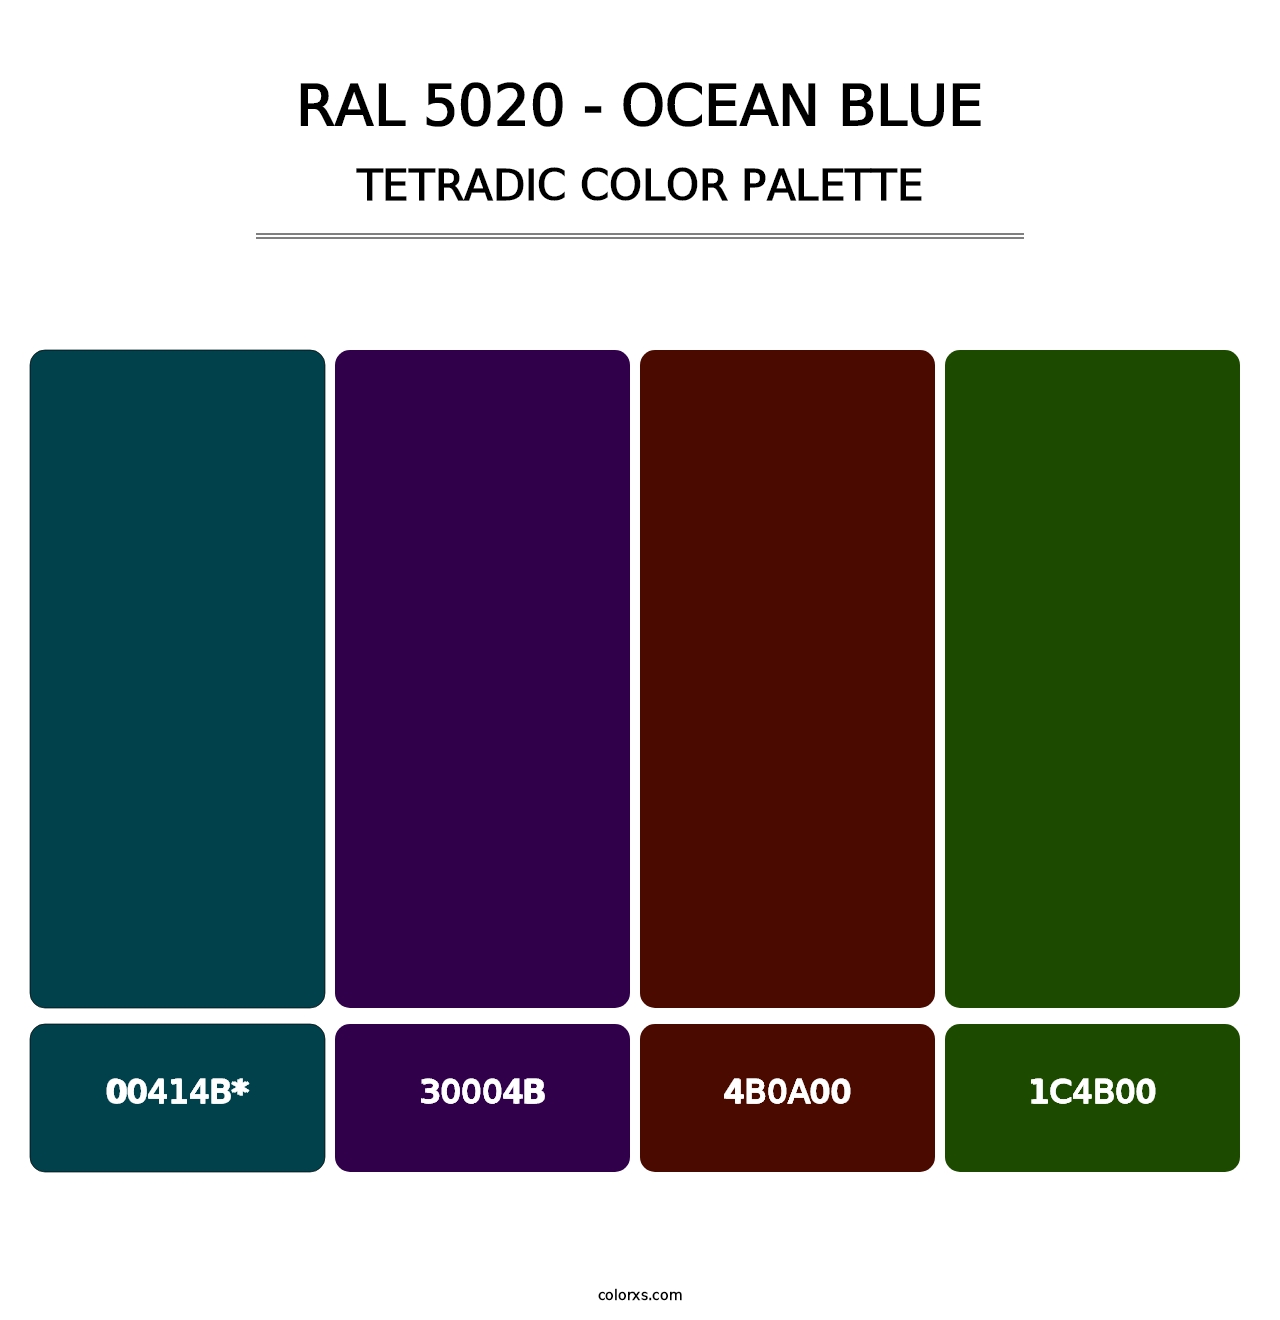 RAL 5020 - Ocean Blue - Tetradic Color Palette